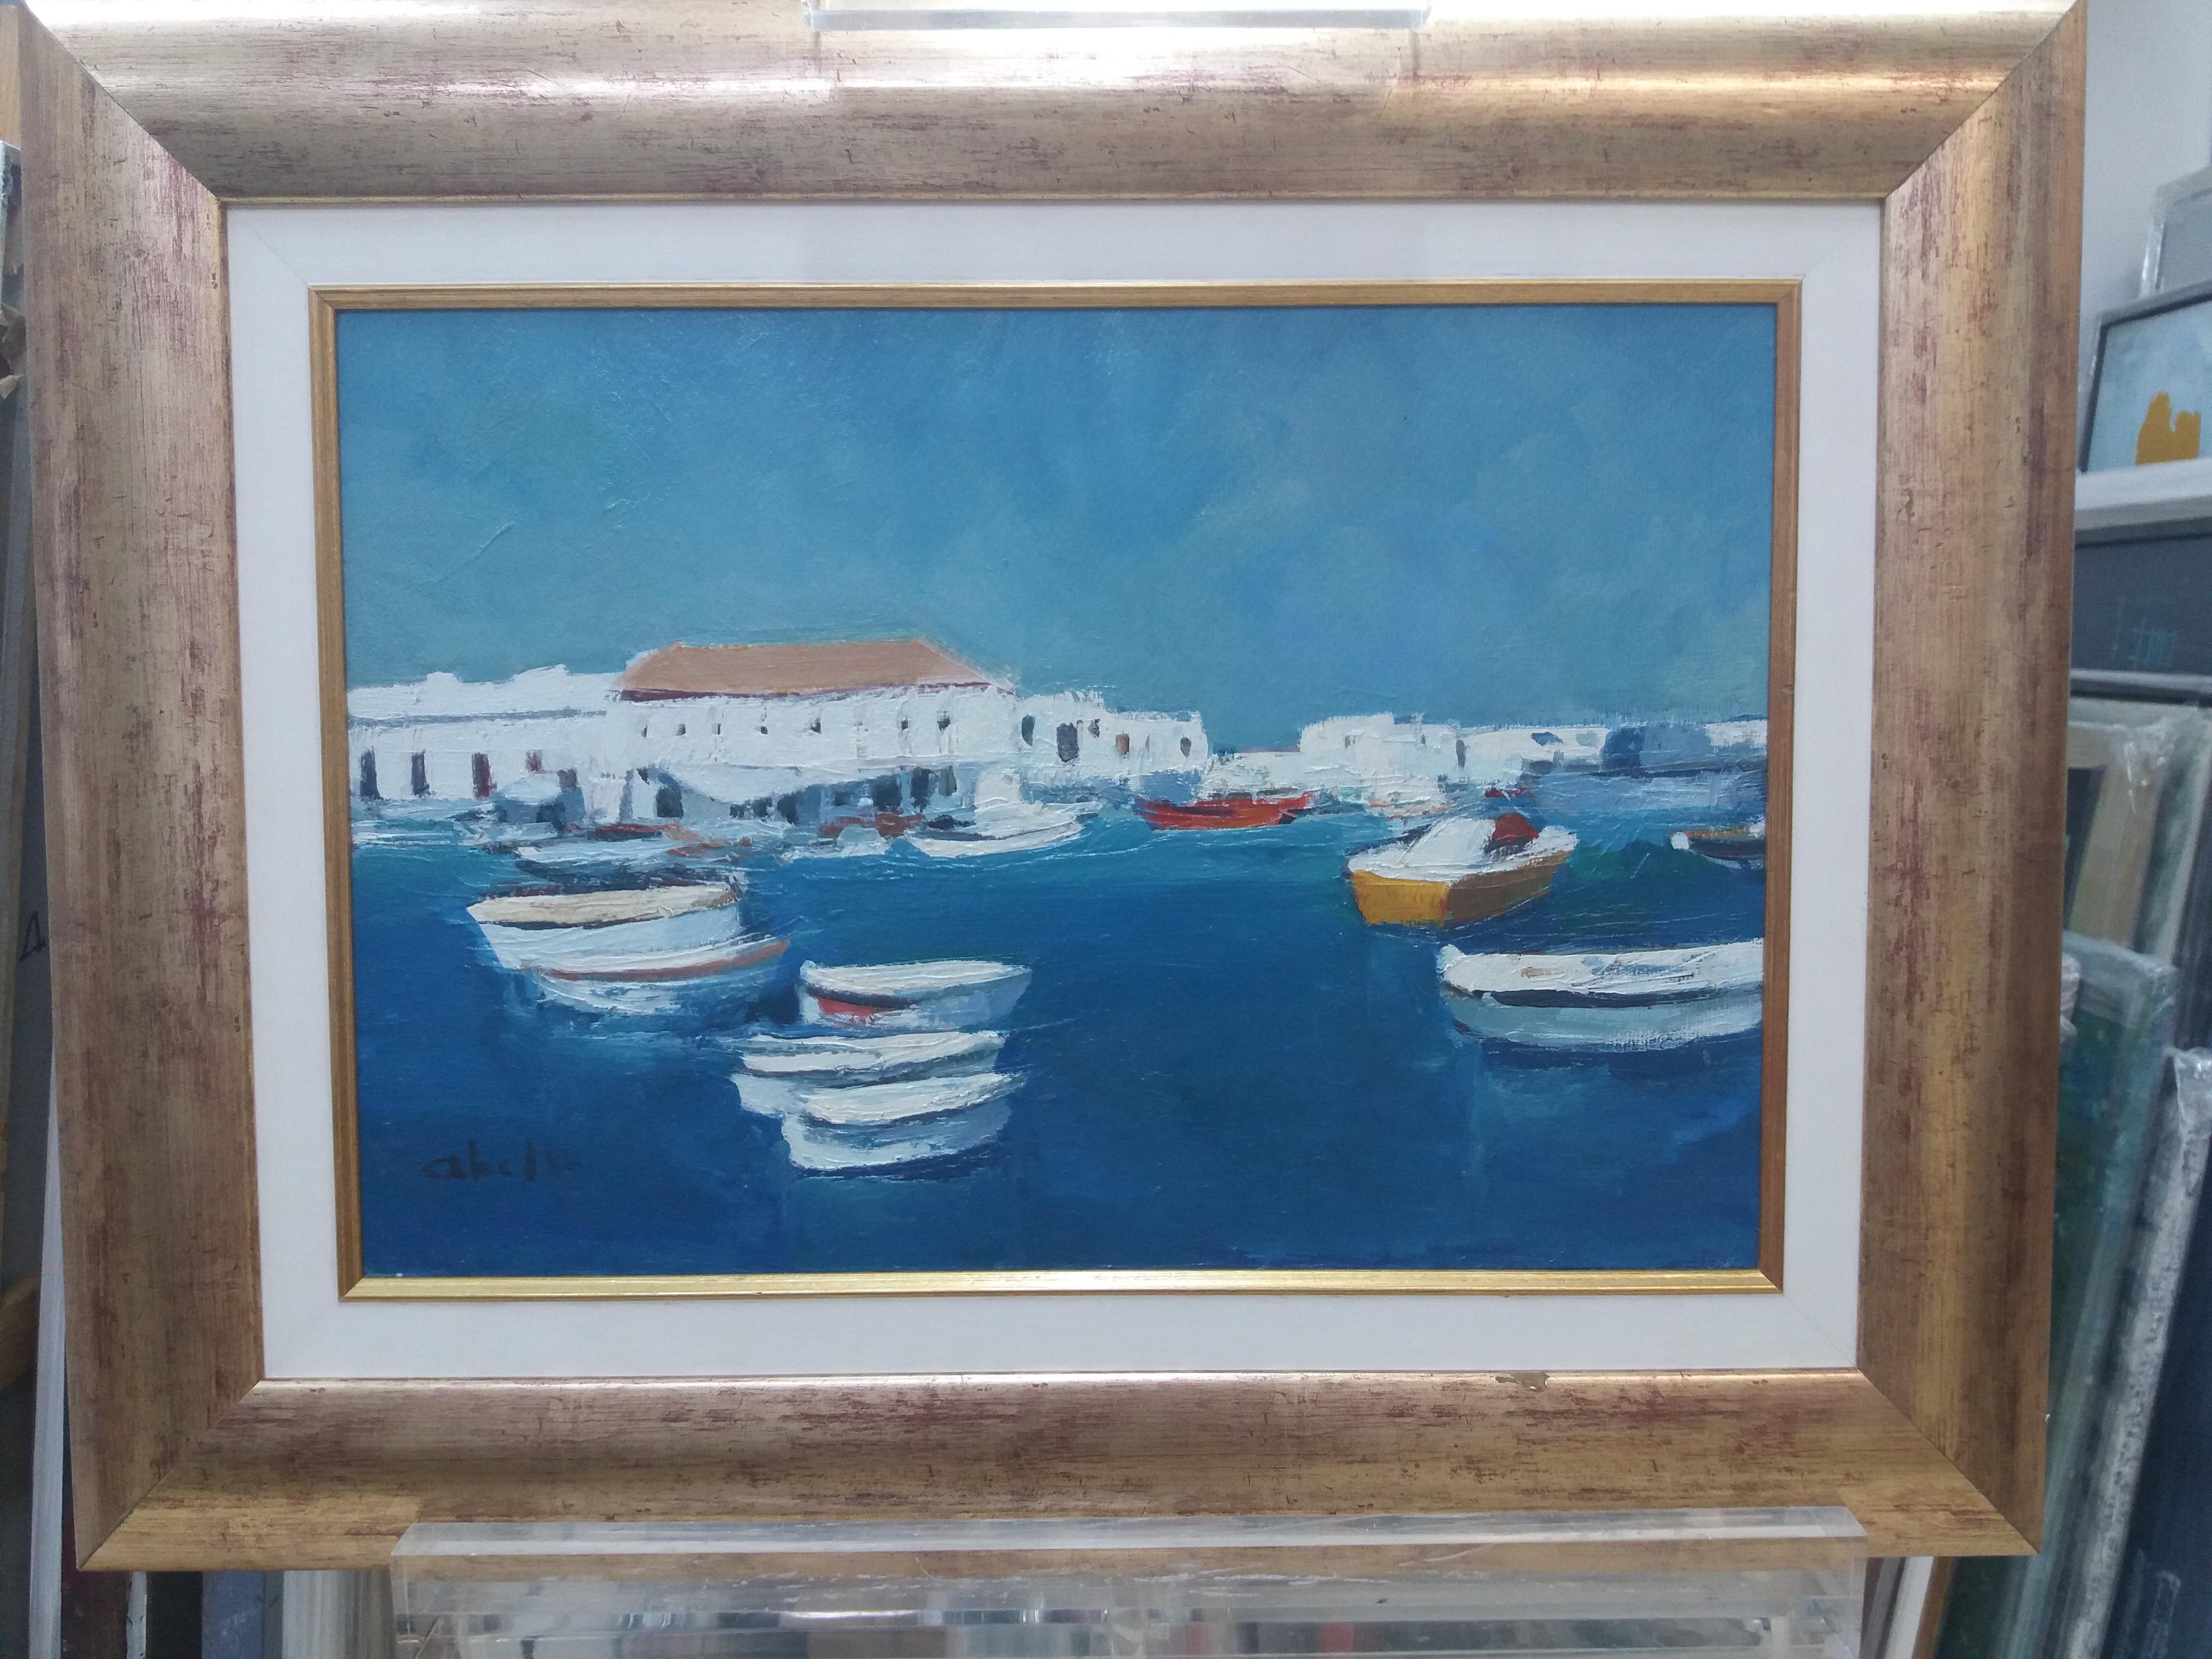  Marine Menorca Original cubist acrylic  Painting 3